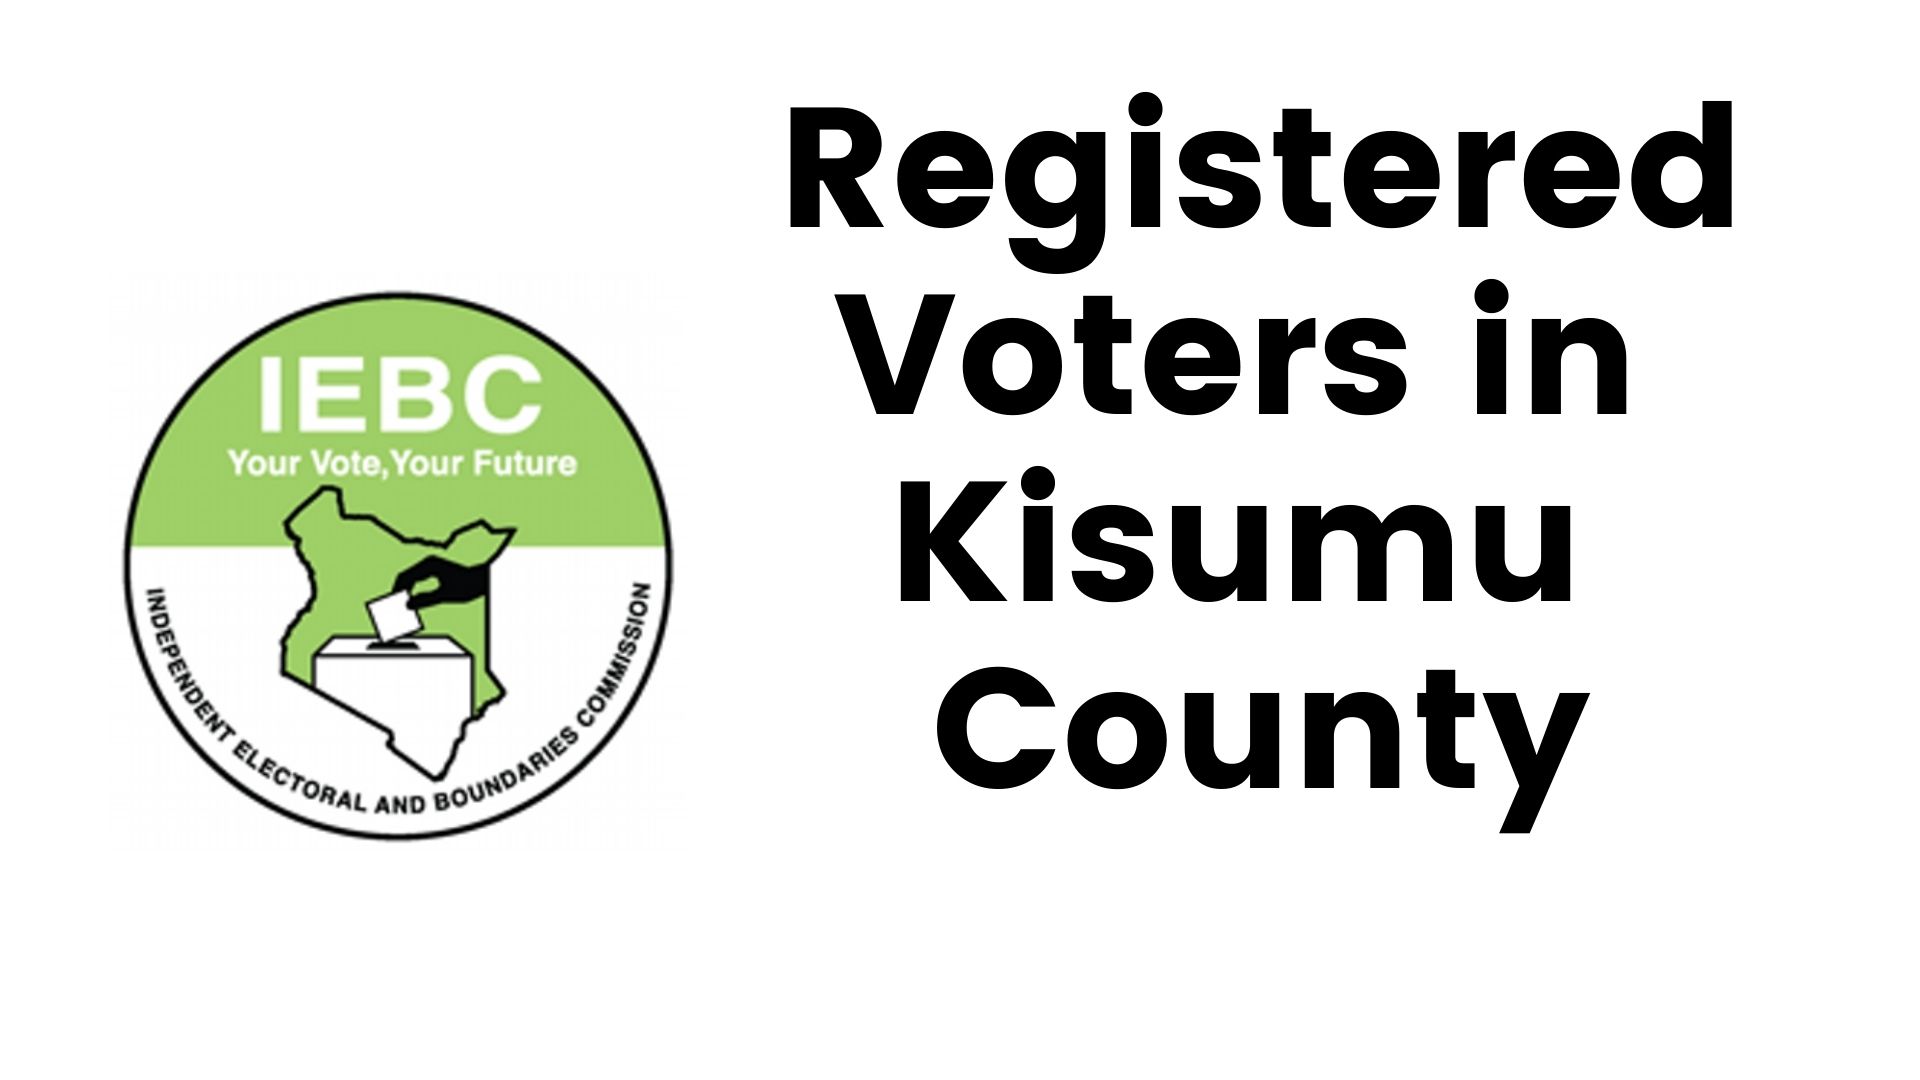 IEBC Kisumu County Registered Voters